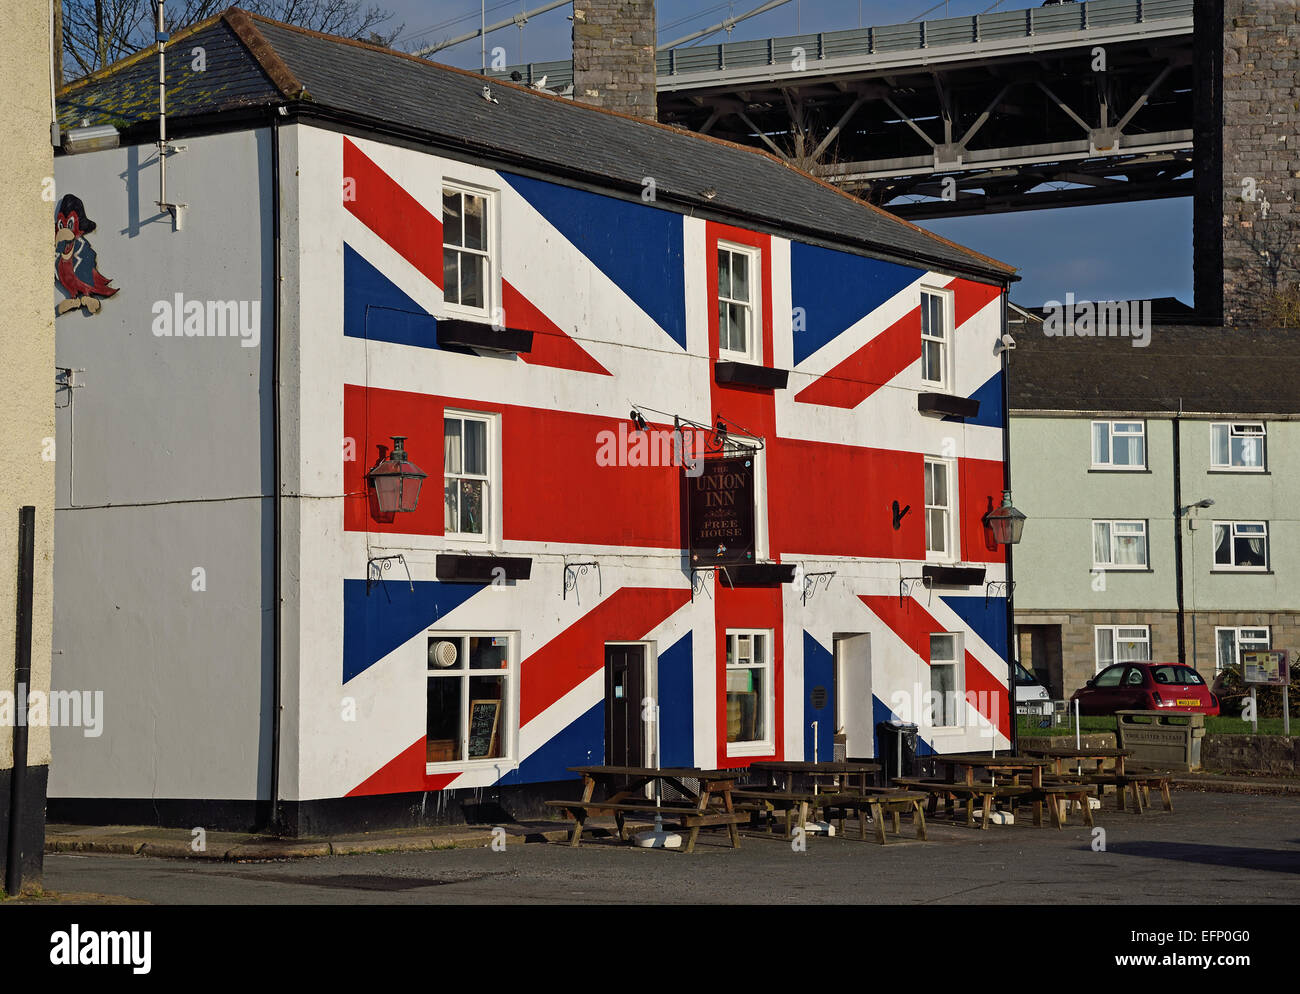 The Union Inn at Saltash, Cornwall , UK celebrates its name through its Union Flag decoration. Stock Photo